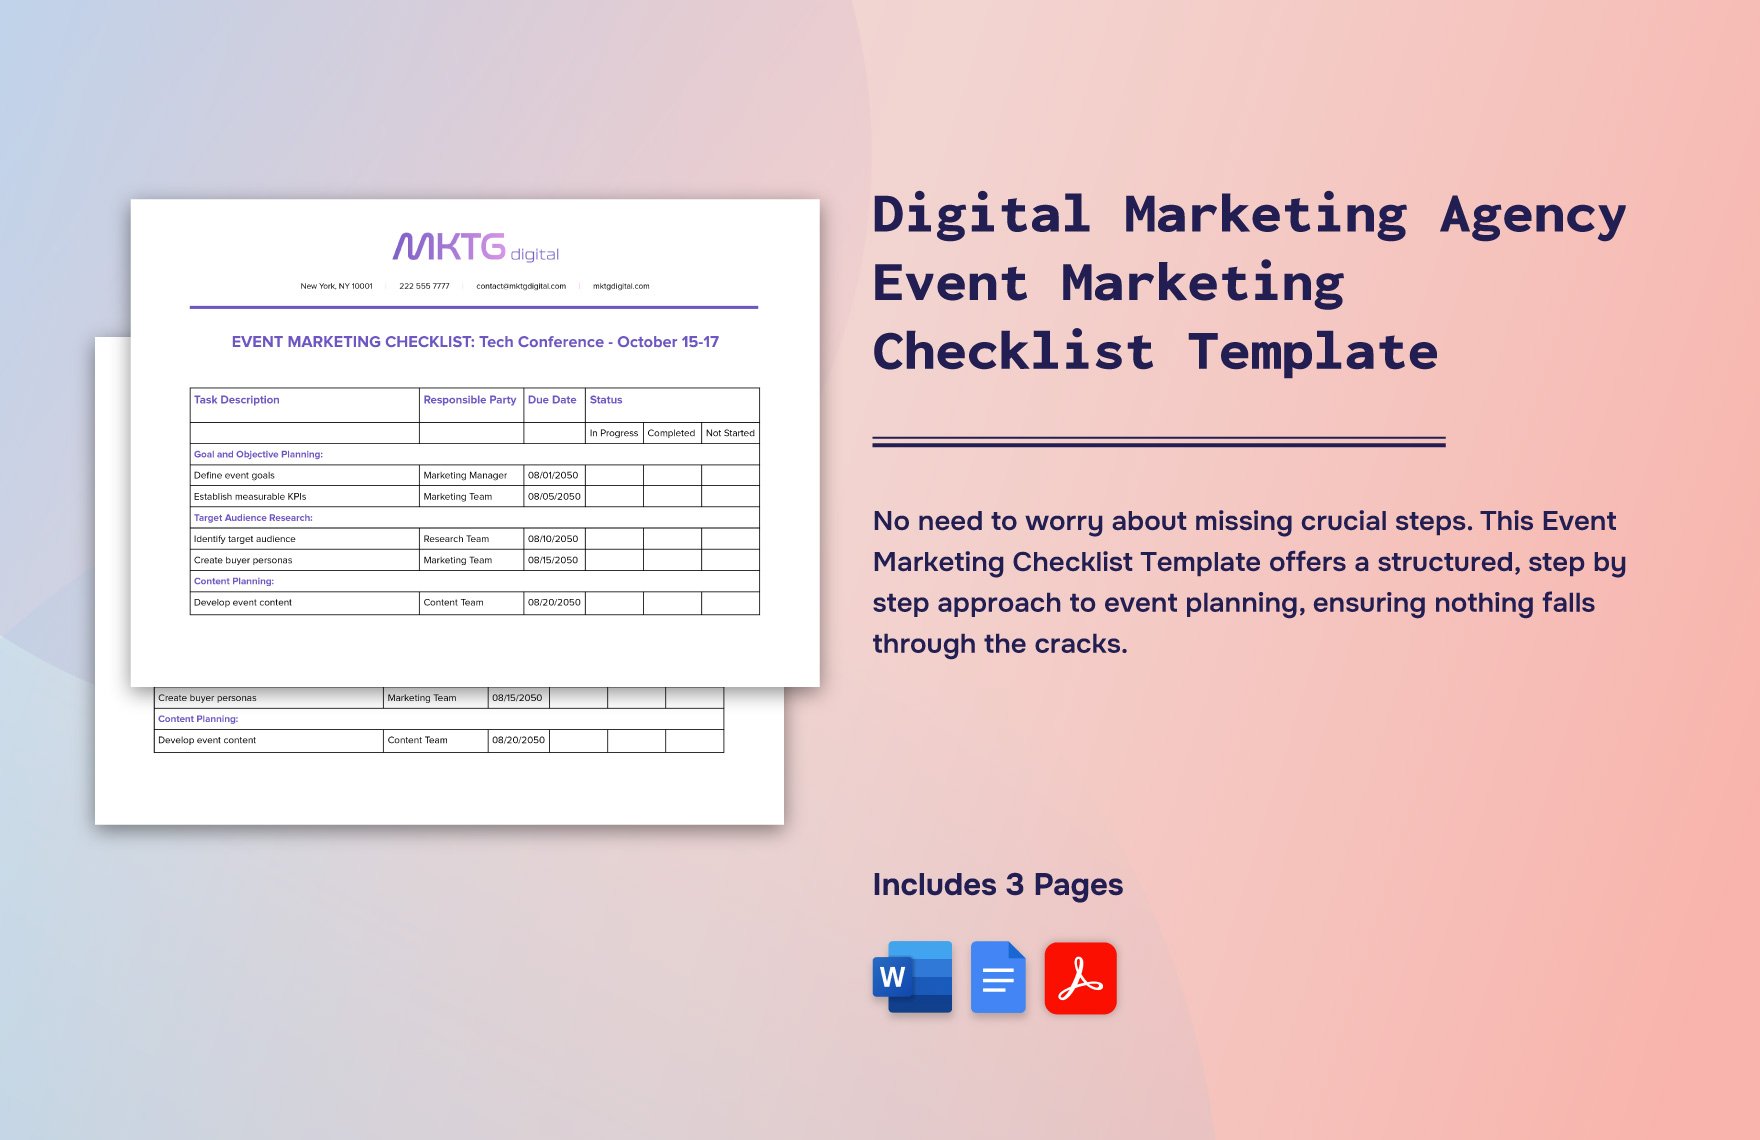 Digital Marketing Agency Event Marketing Checklist Template